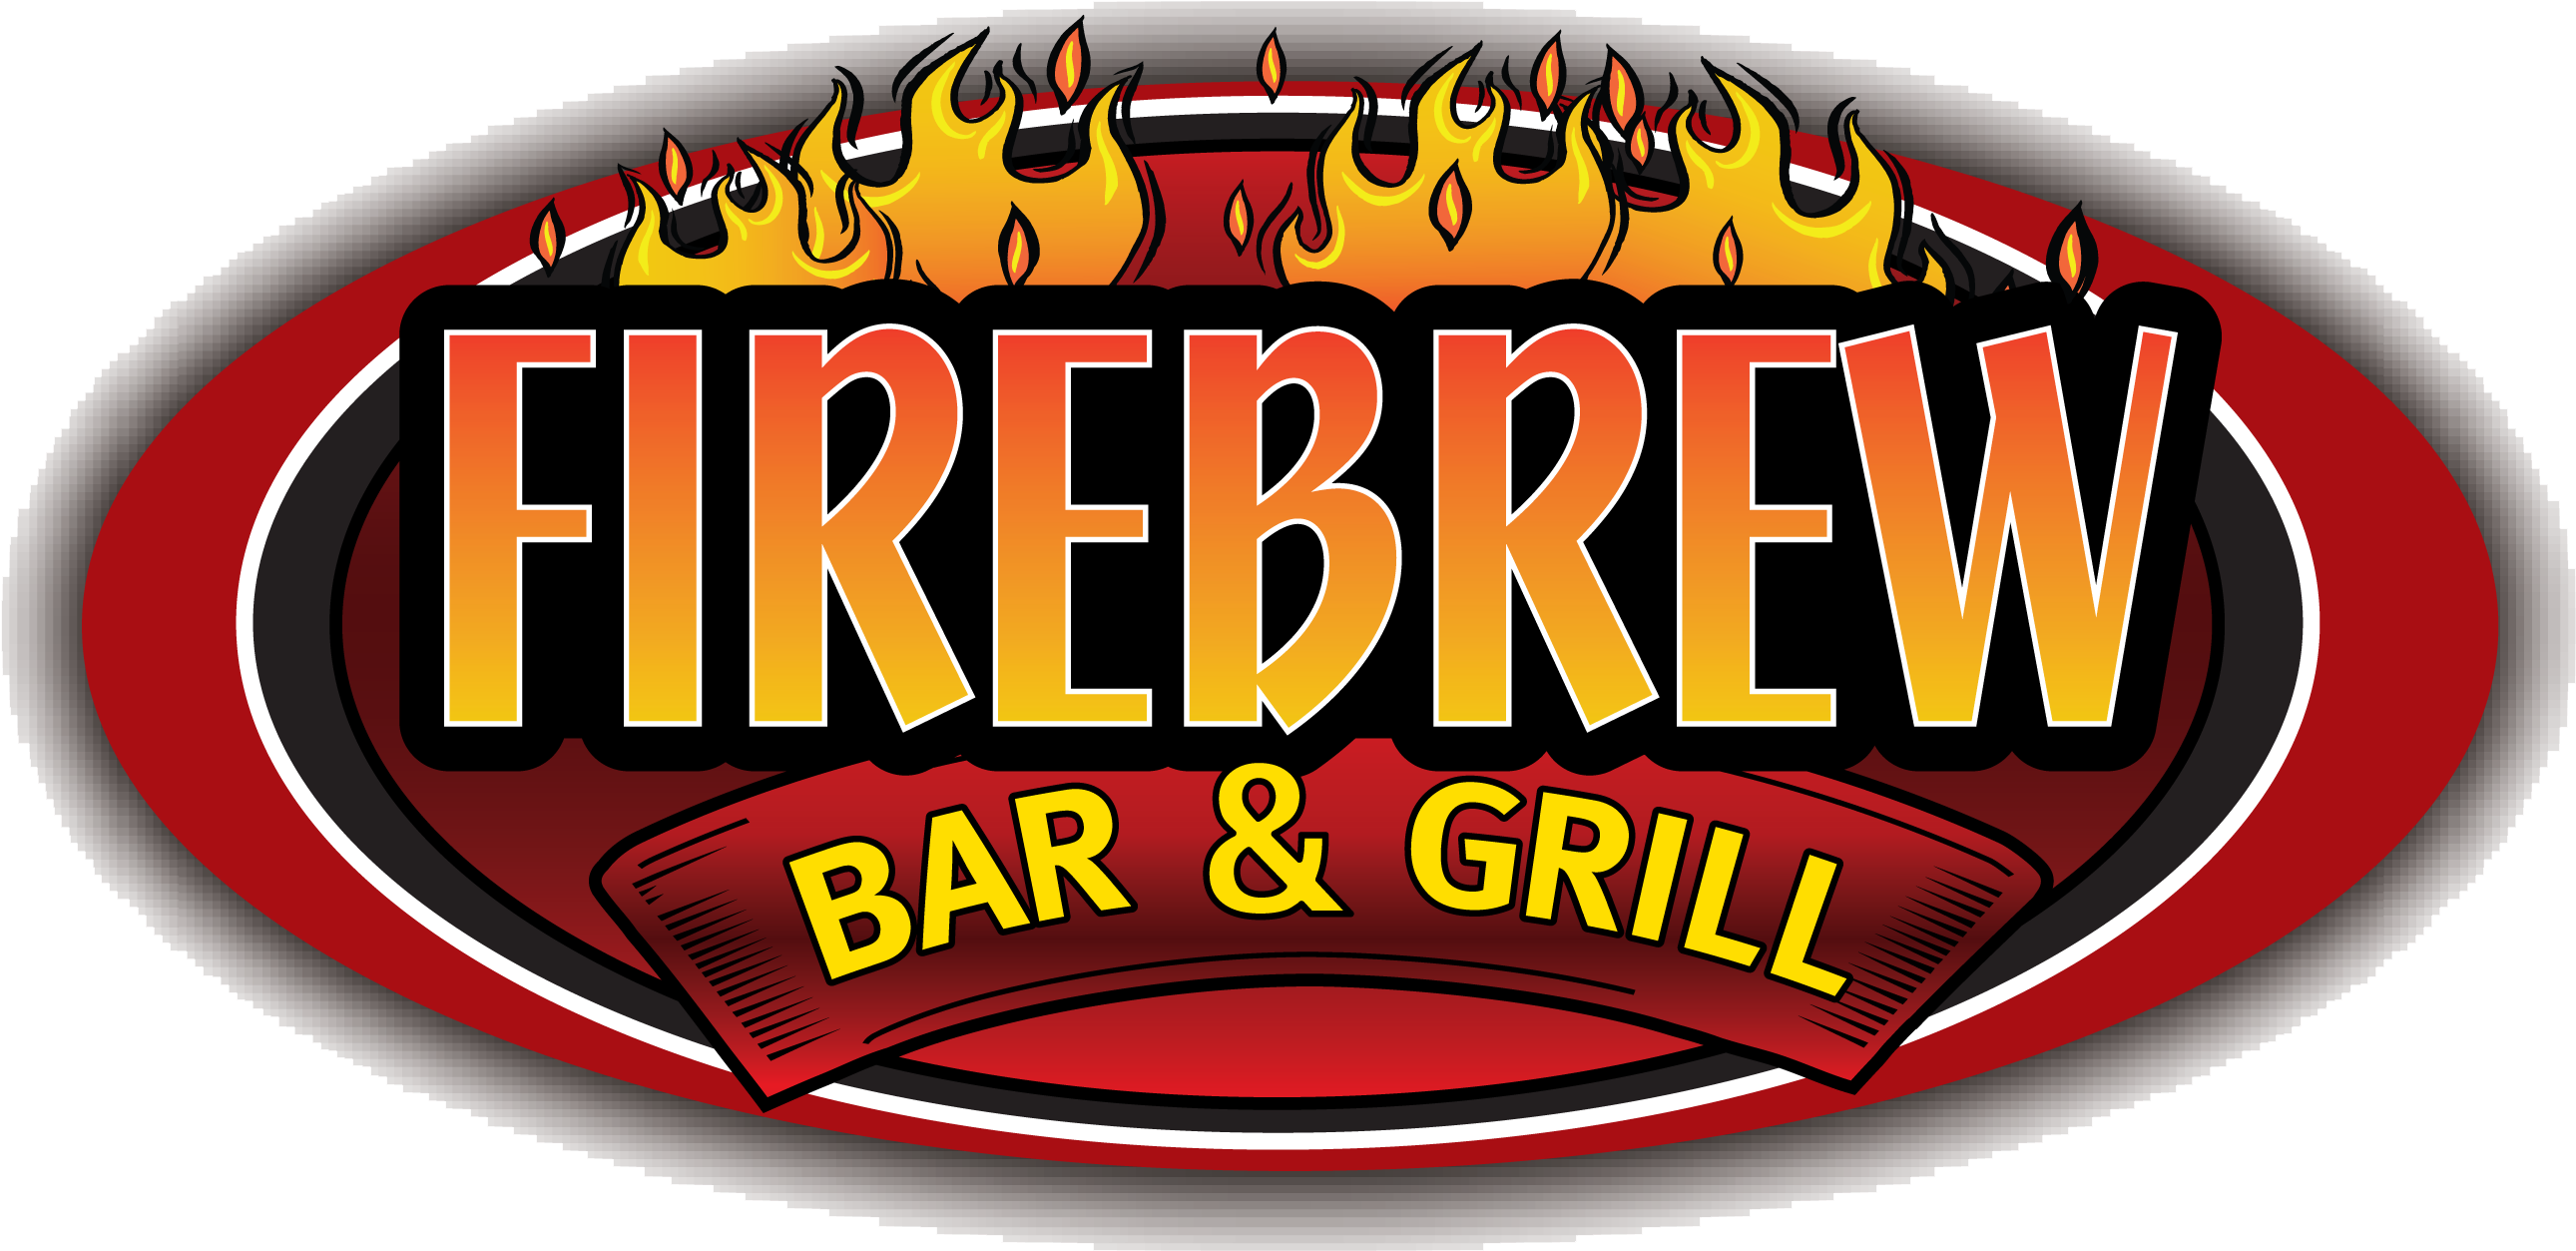 Firebrew Logo 5 12 - Firebrew Bar And Grill Va Beach (3042x1700)